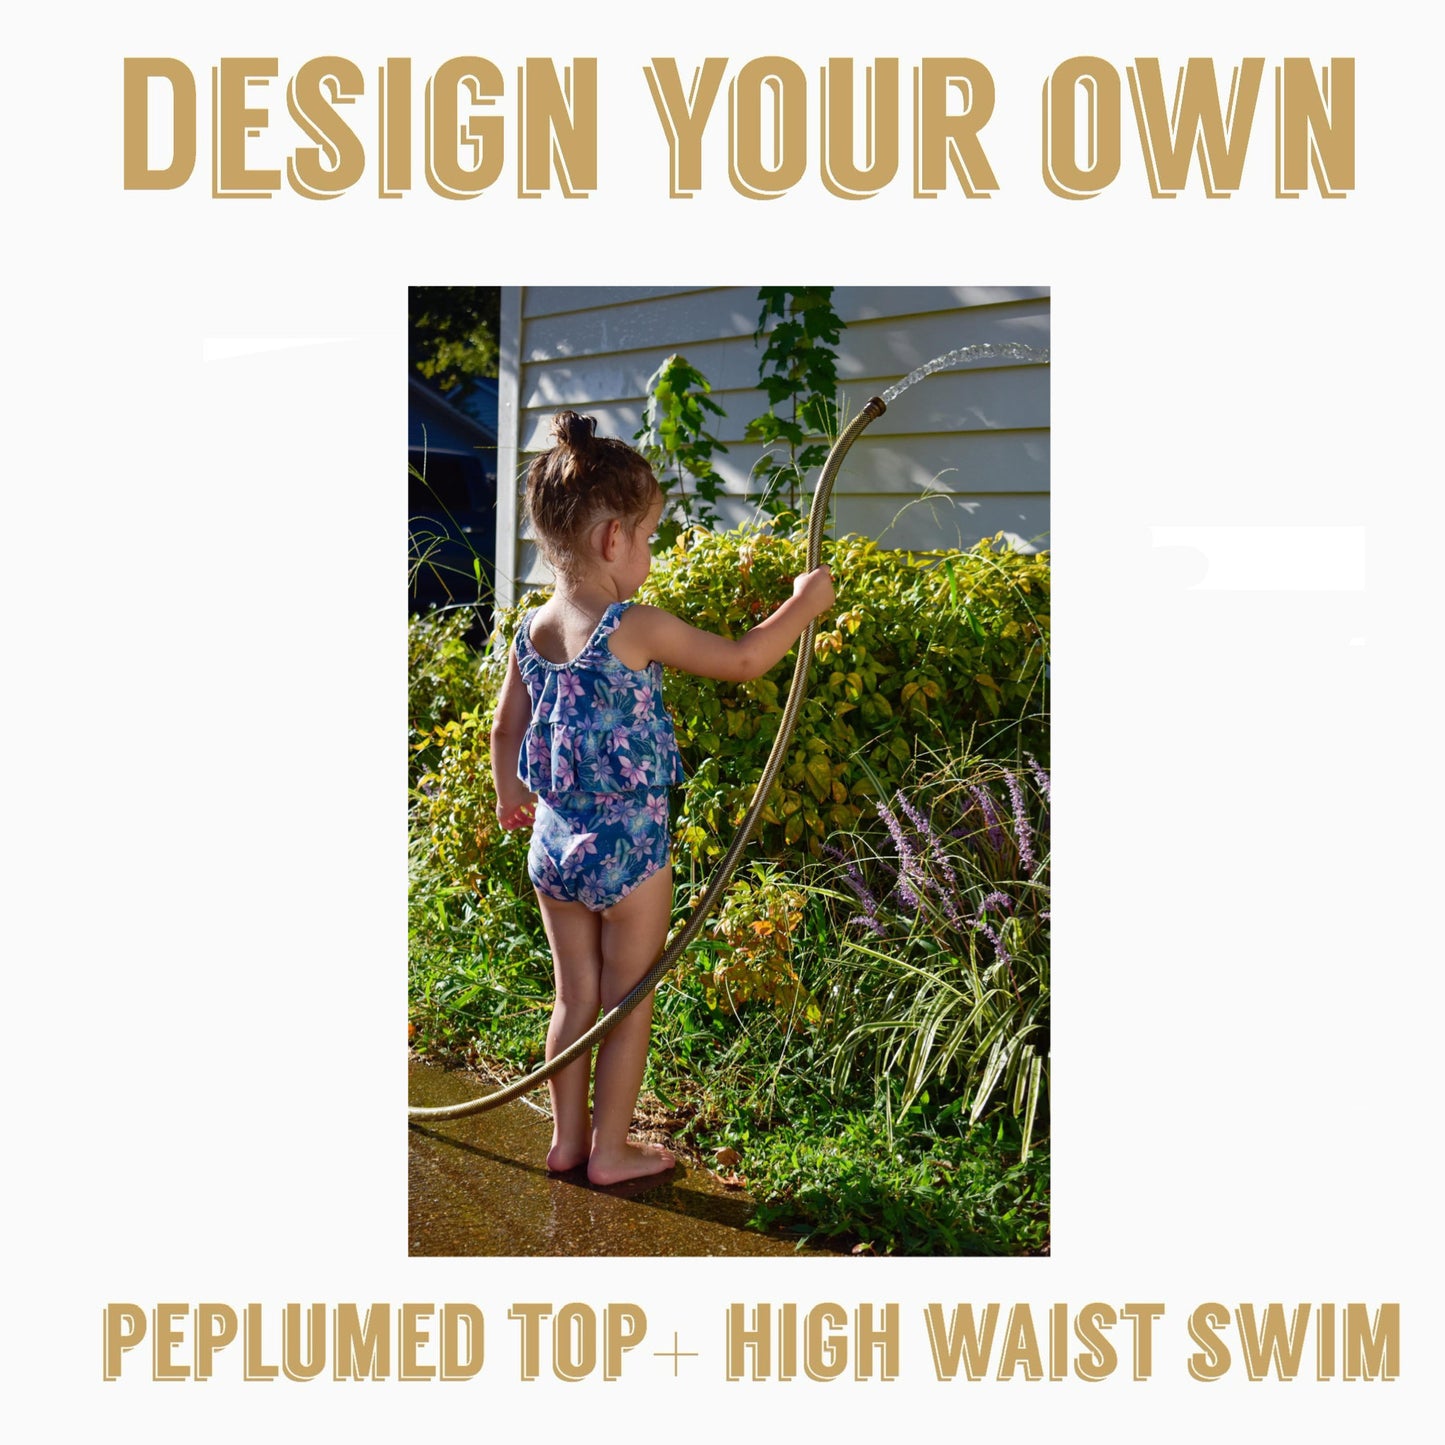 Design Your Own| Peplum Top + High waisted Bottoms 2 piece Swim suit